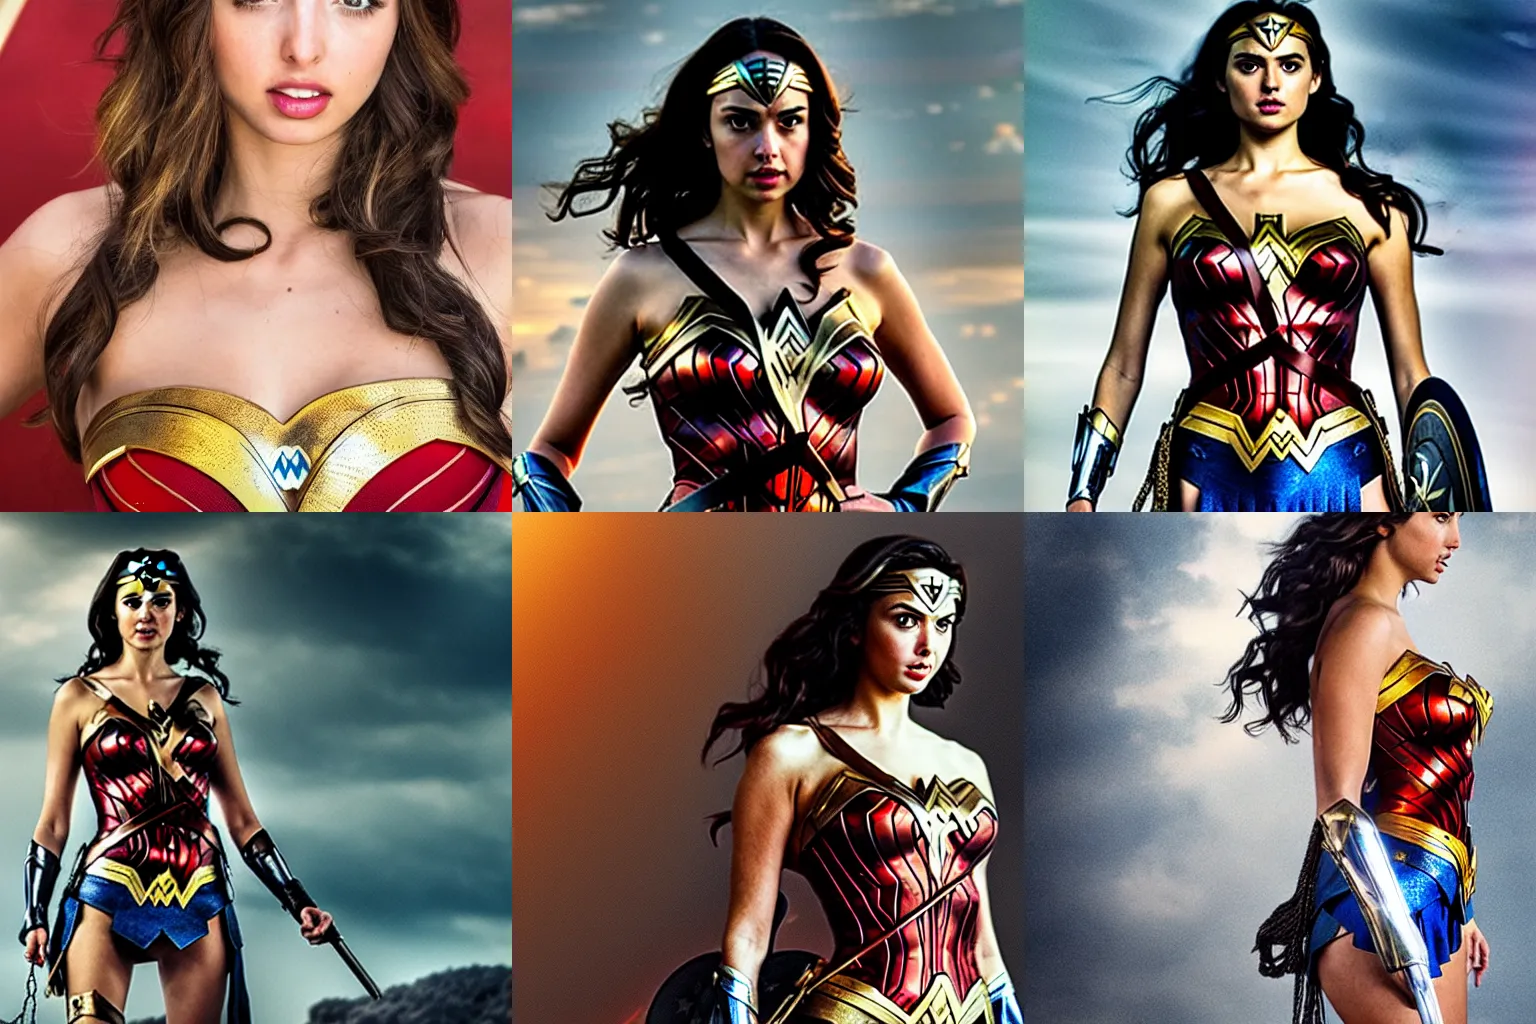 Prompt: Ana de Armas as Wonder Woman.